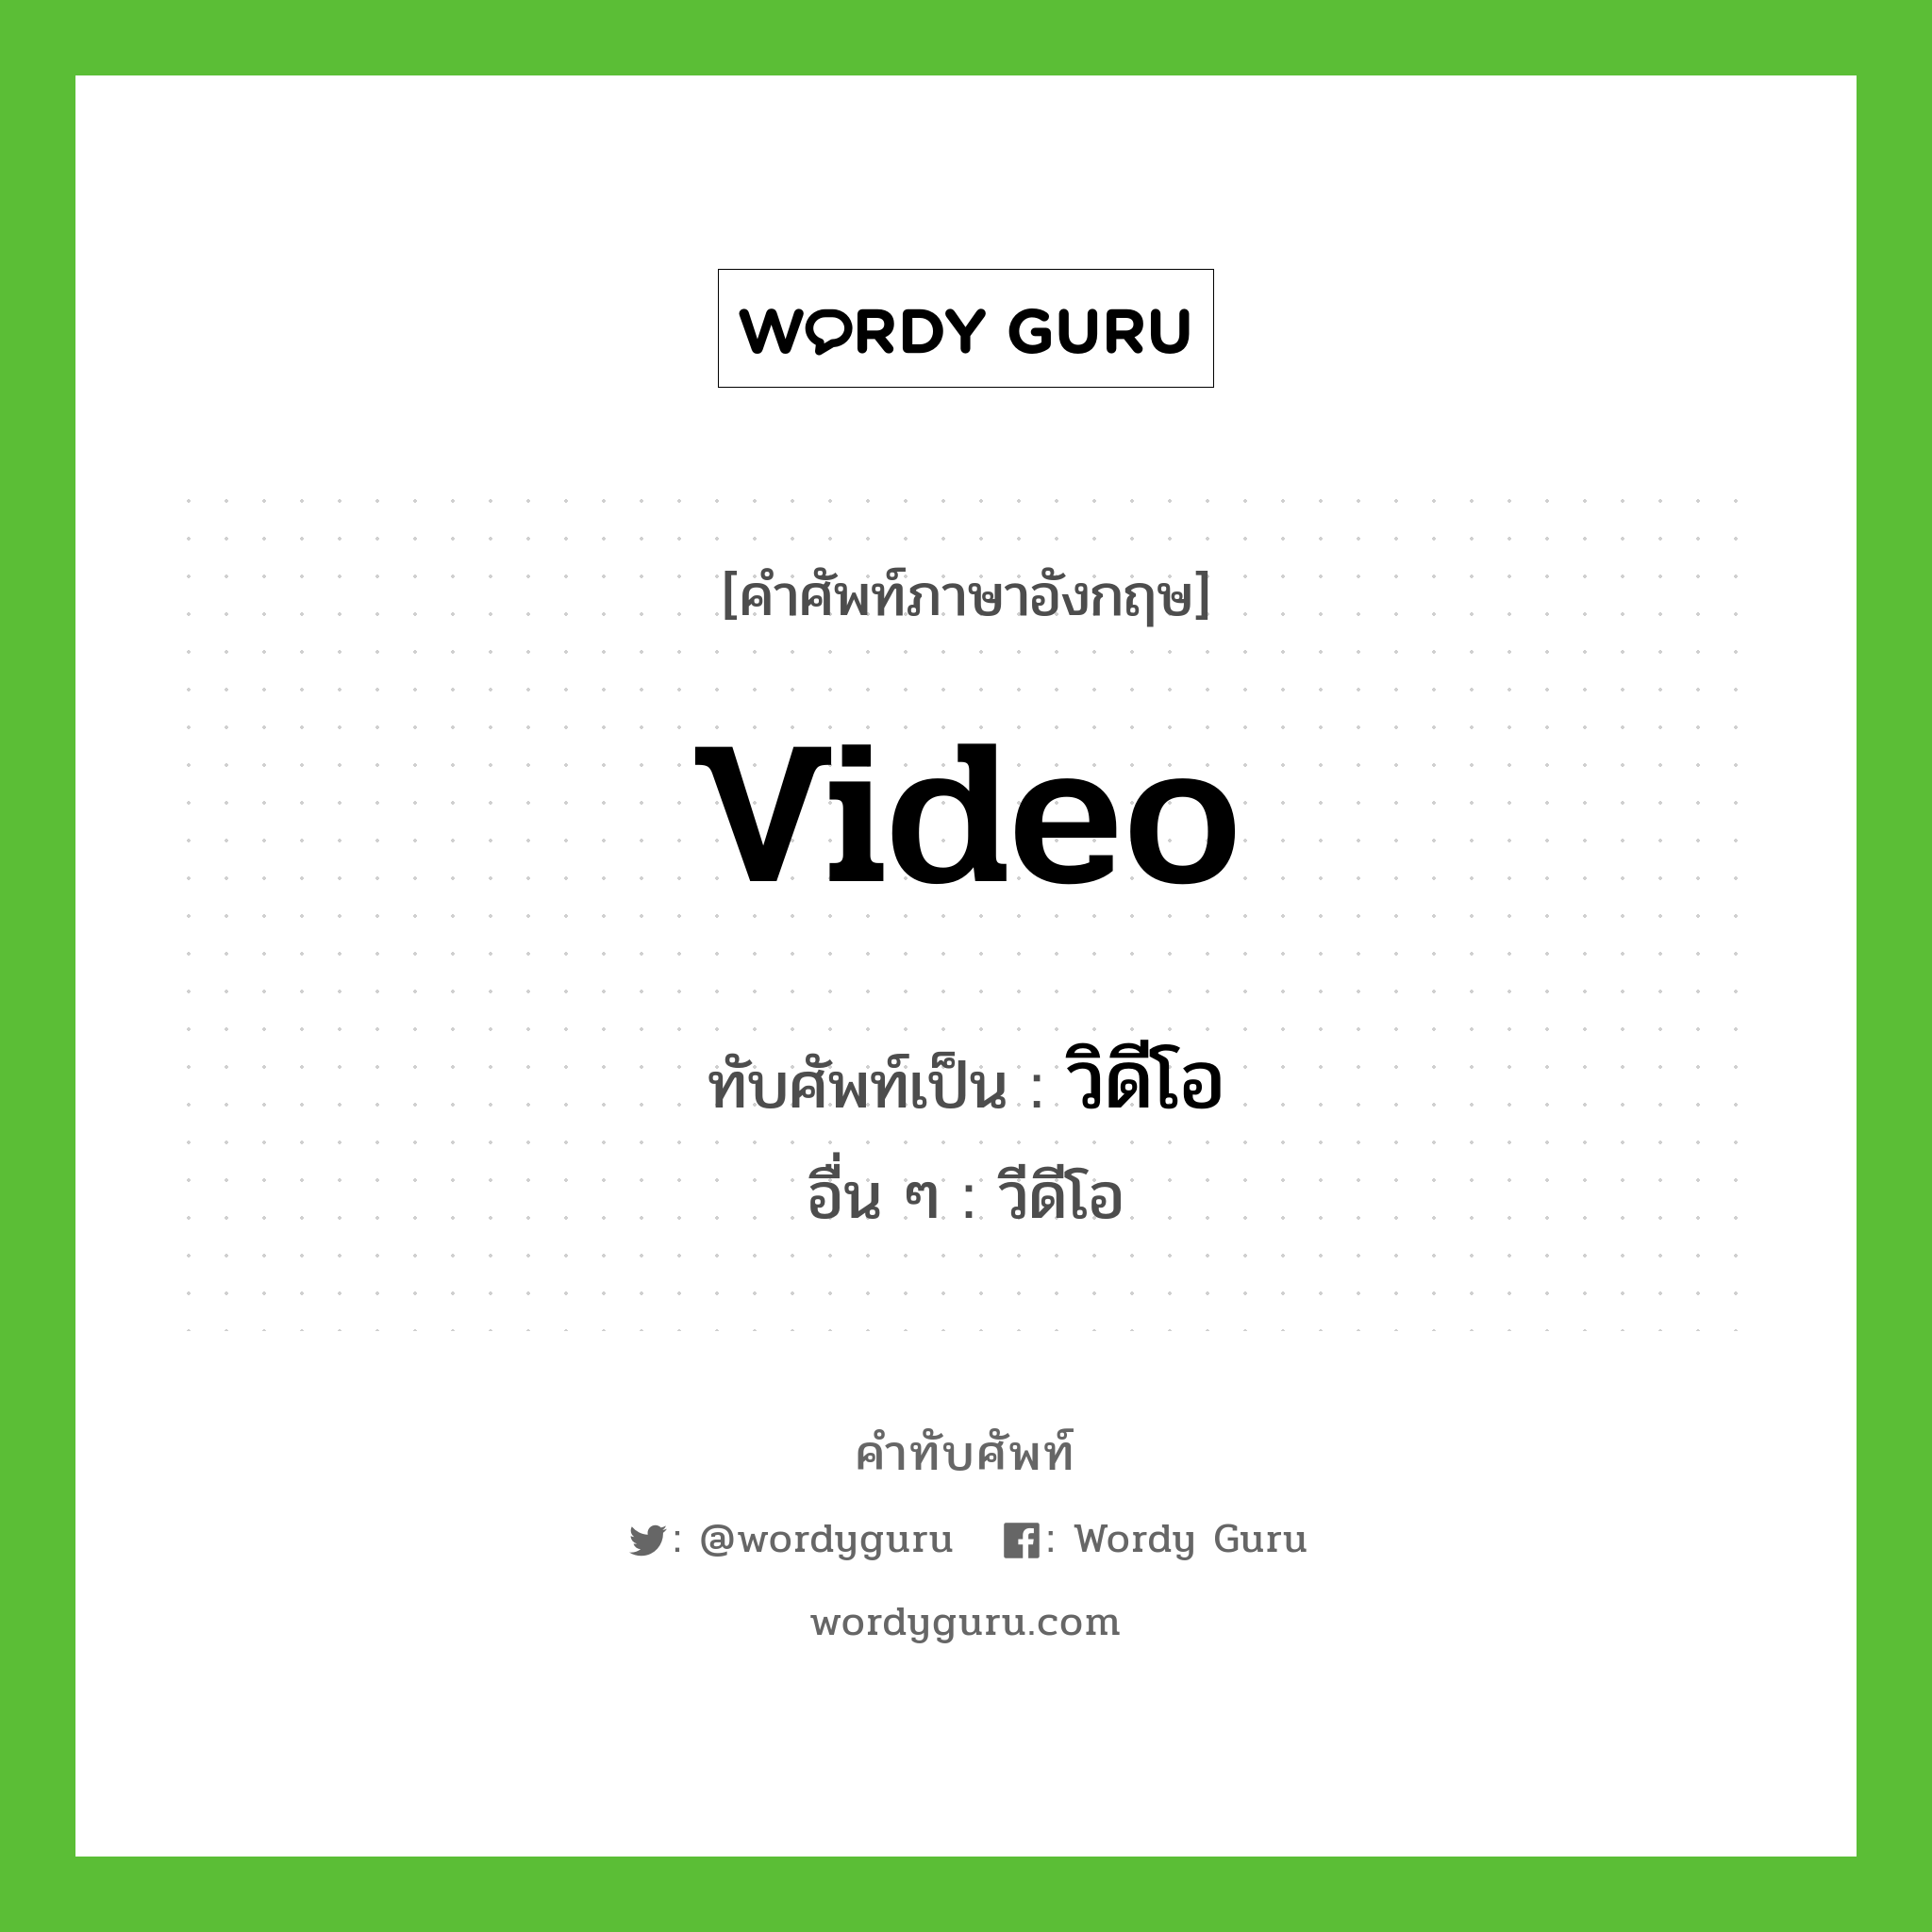 video เขียนเป็นคำไทยว่าอะไร?, คำศัพท์ภาษาอังกฤษ video ทับศัพท์เป็น วิดีโอ อื่น ๆ วีดีโอ